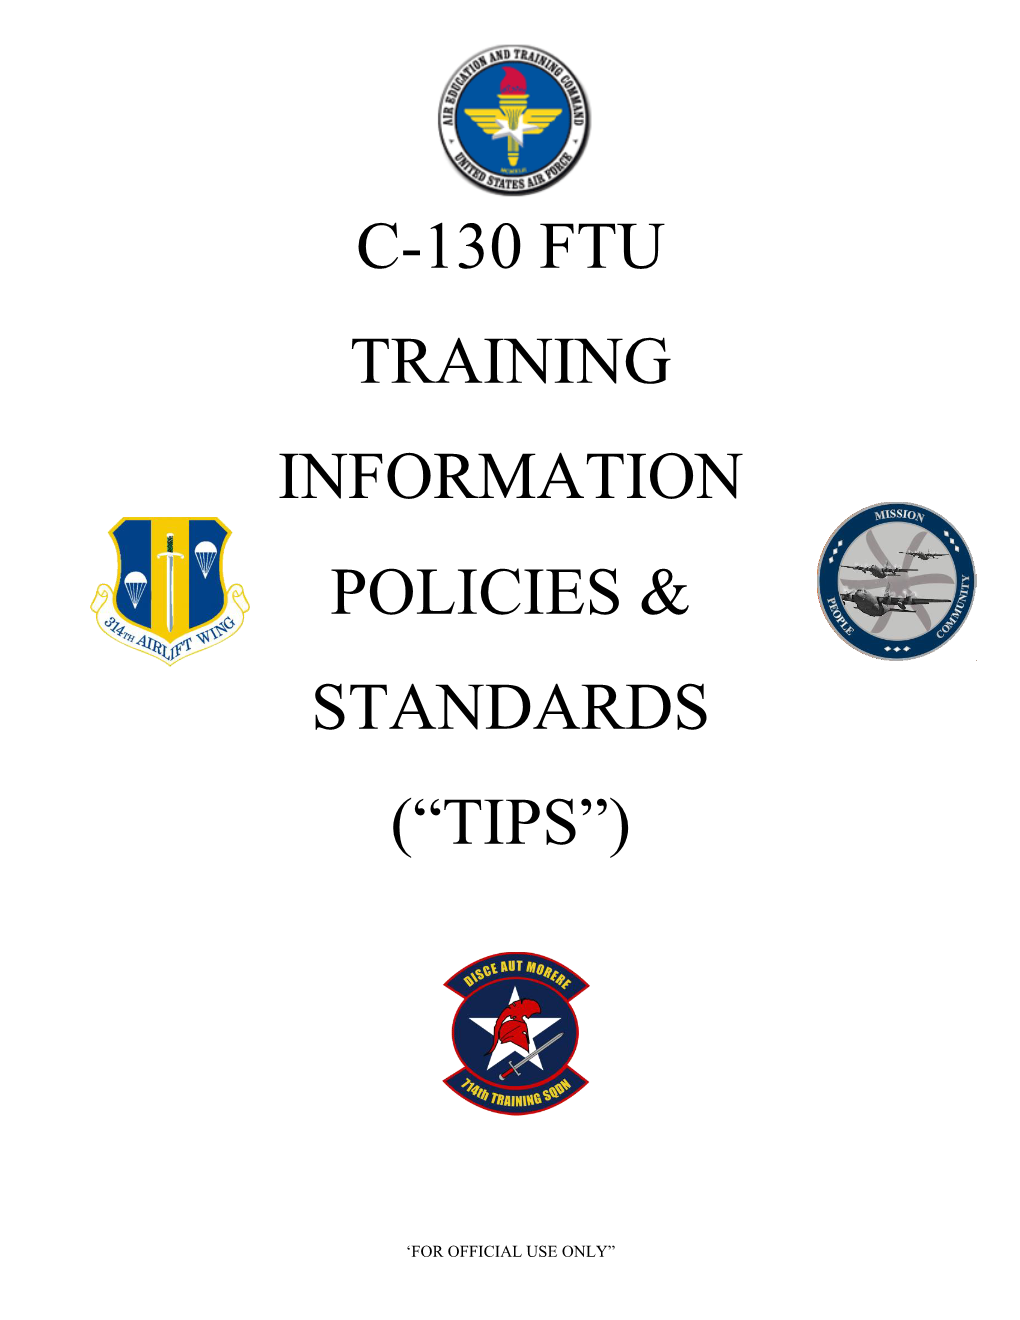 C-130 Ftu Training Information Policies & Standards (“Tips”)